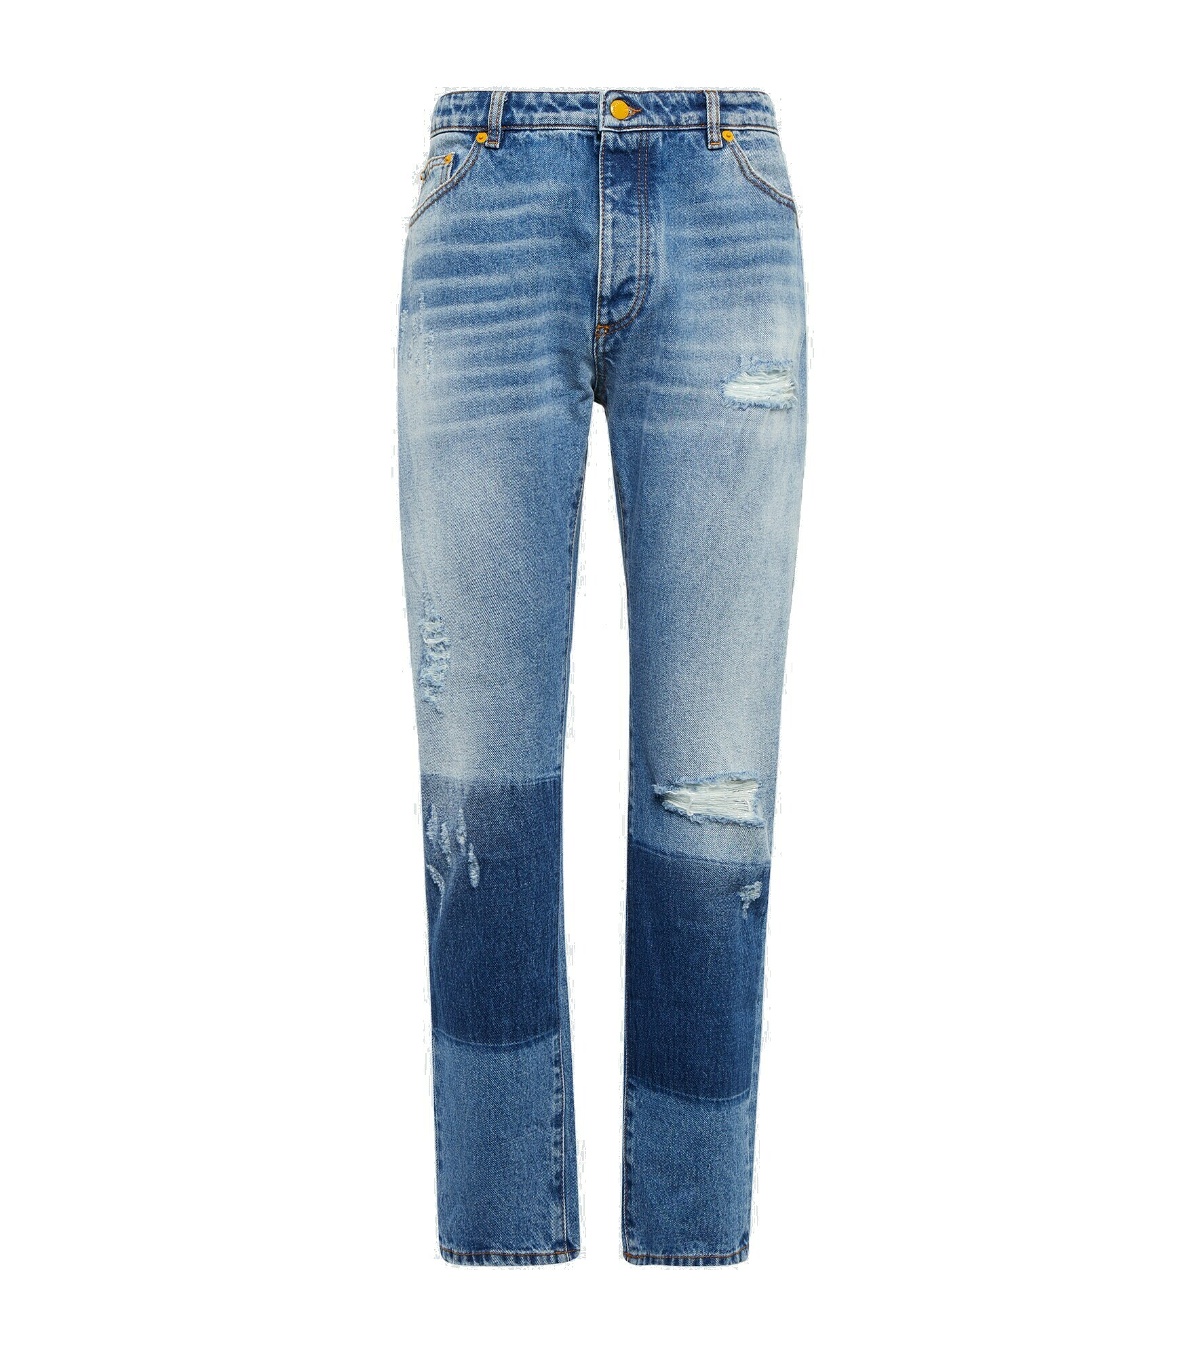 Moncler Genius - Distressed slim-leg jeans Moncler Genius